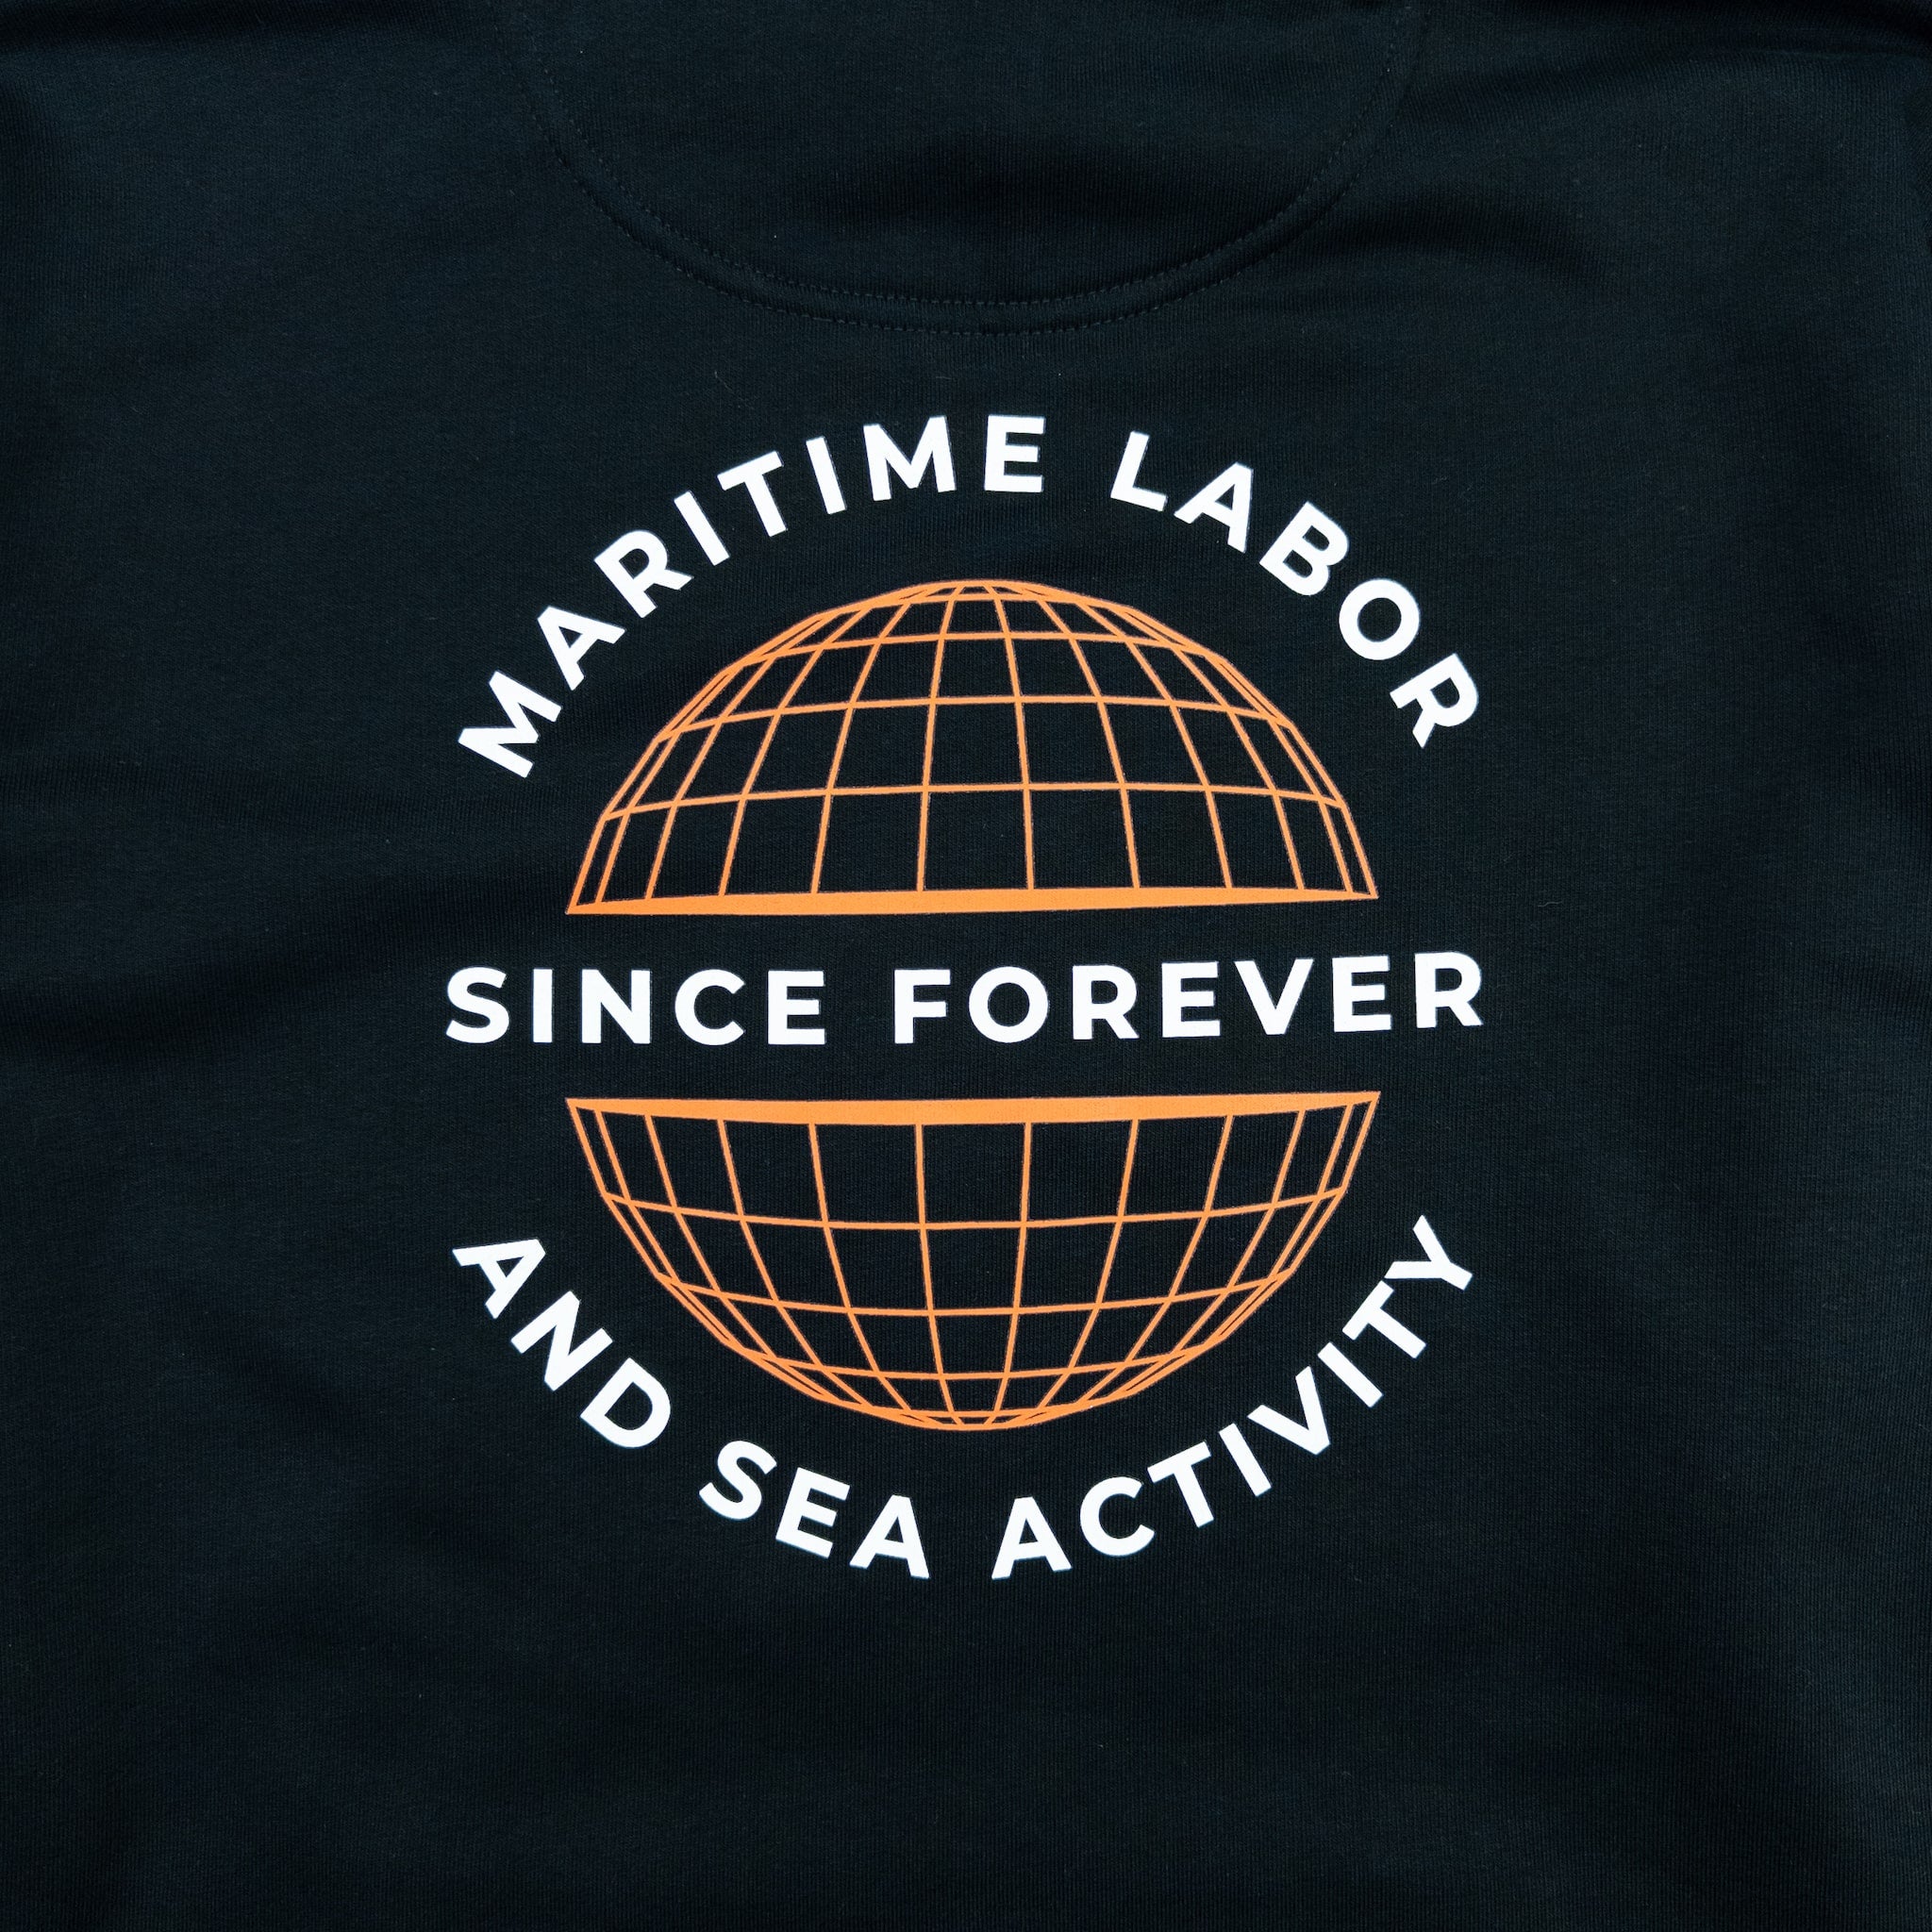 Maritime Labor and Sea Activities Hoodie - Worldwide Nation